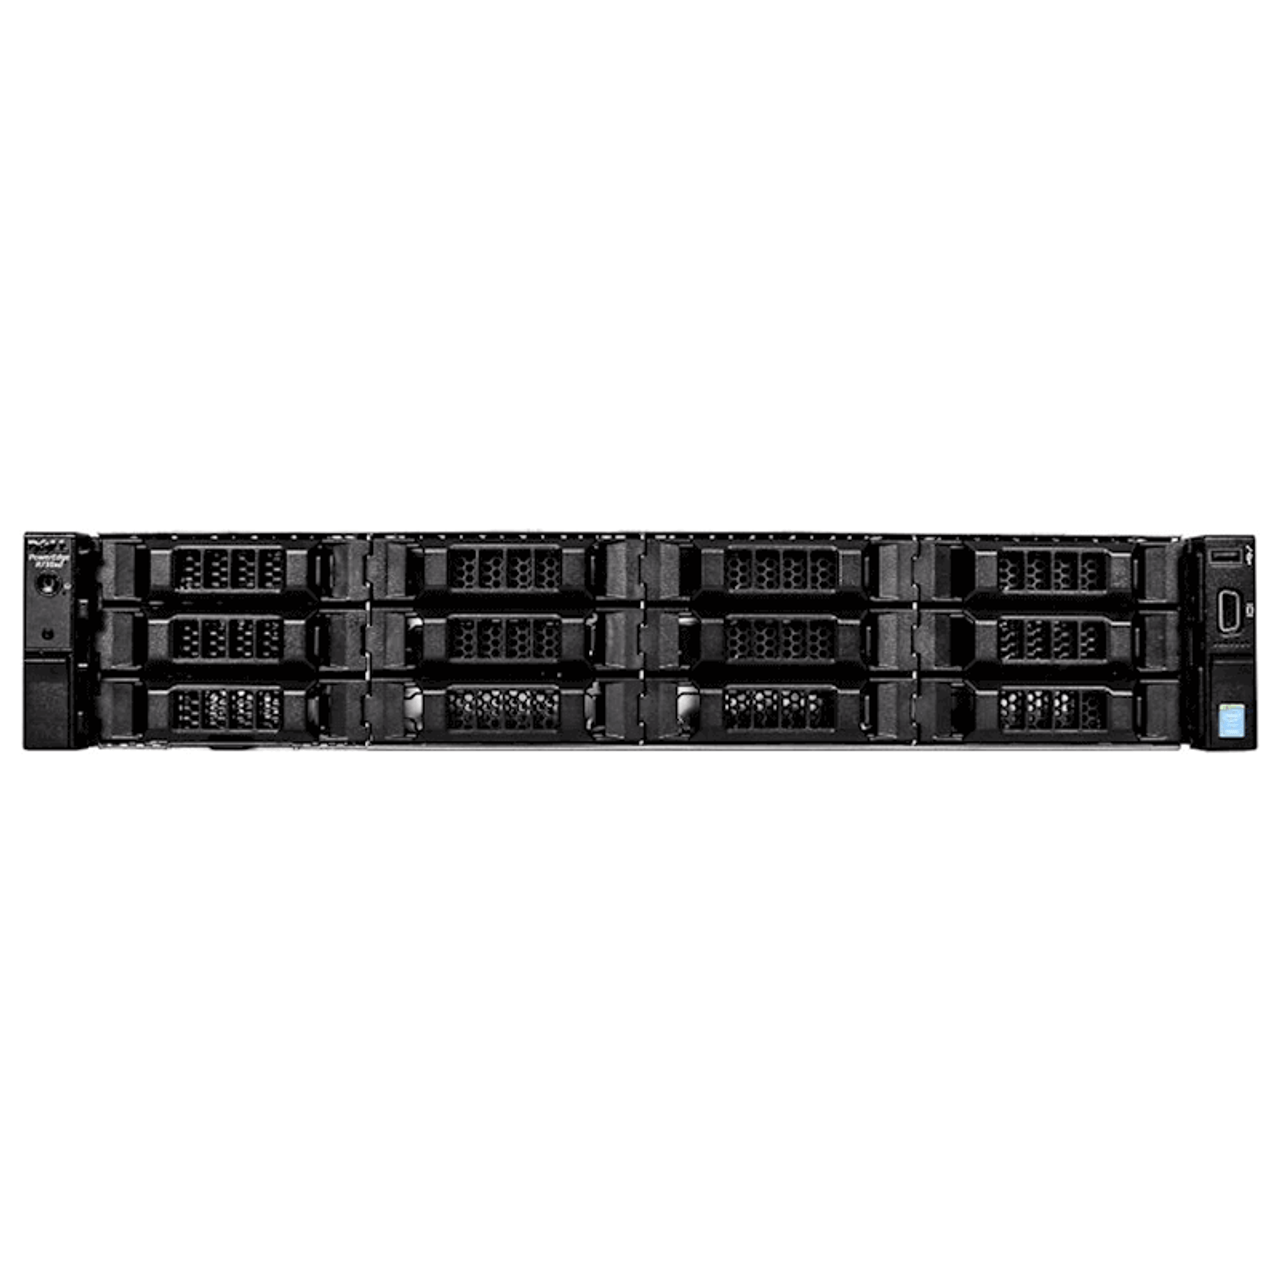 DELL PowerEdge R720 Server / 12 Cores / 192GB RAM / 16TB Storage Server